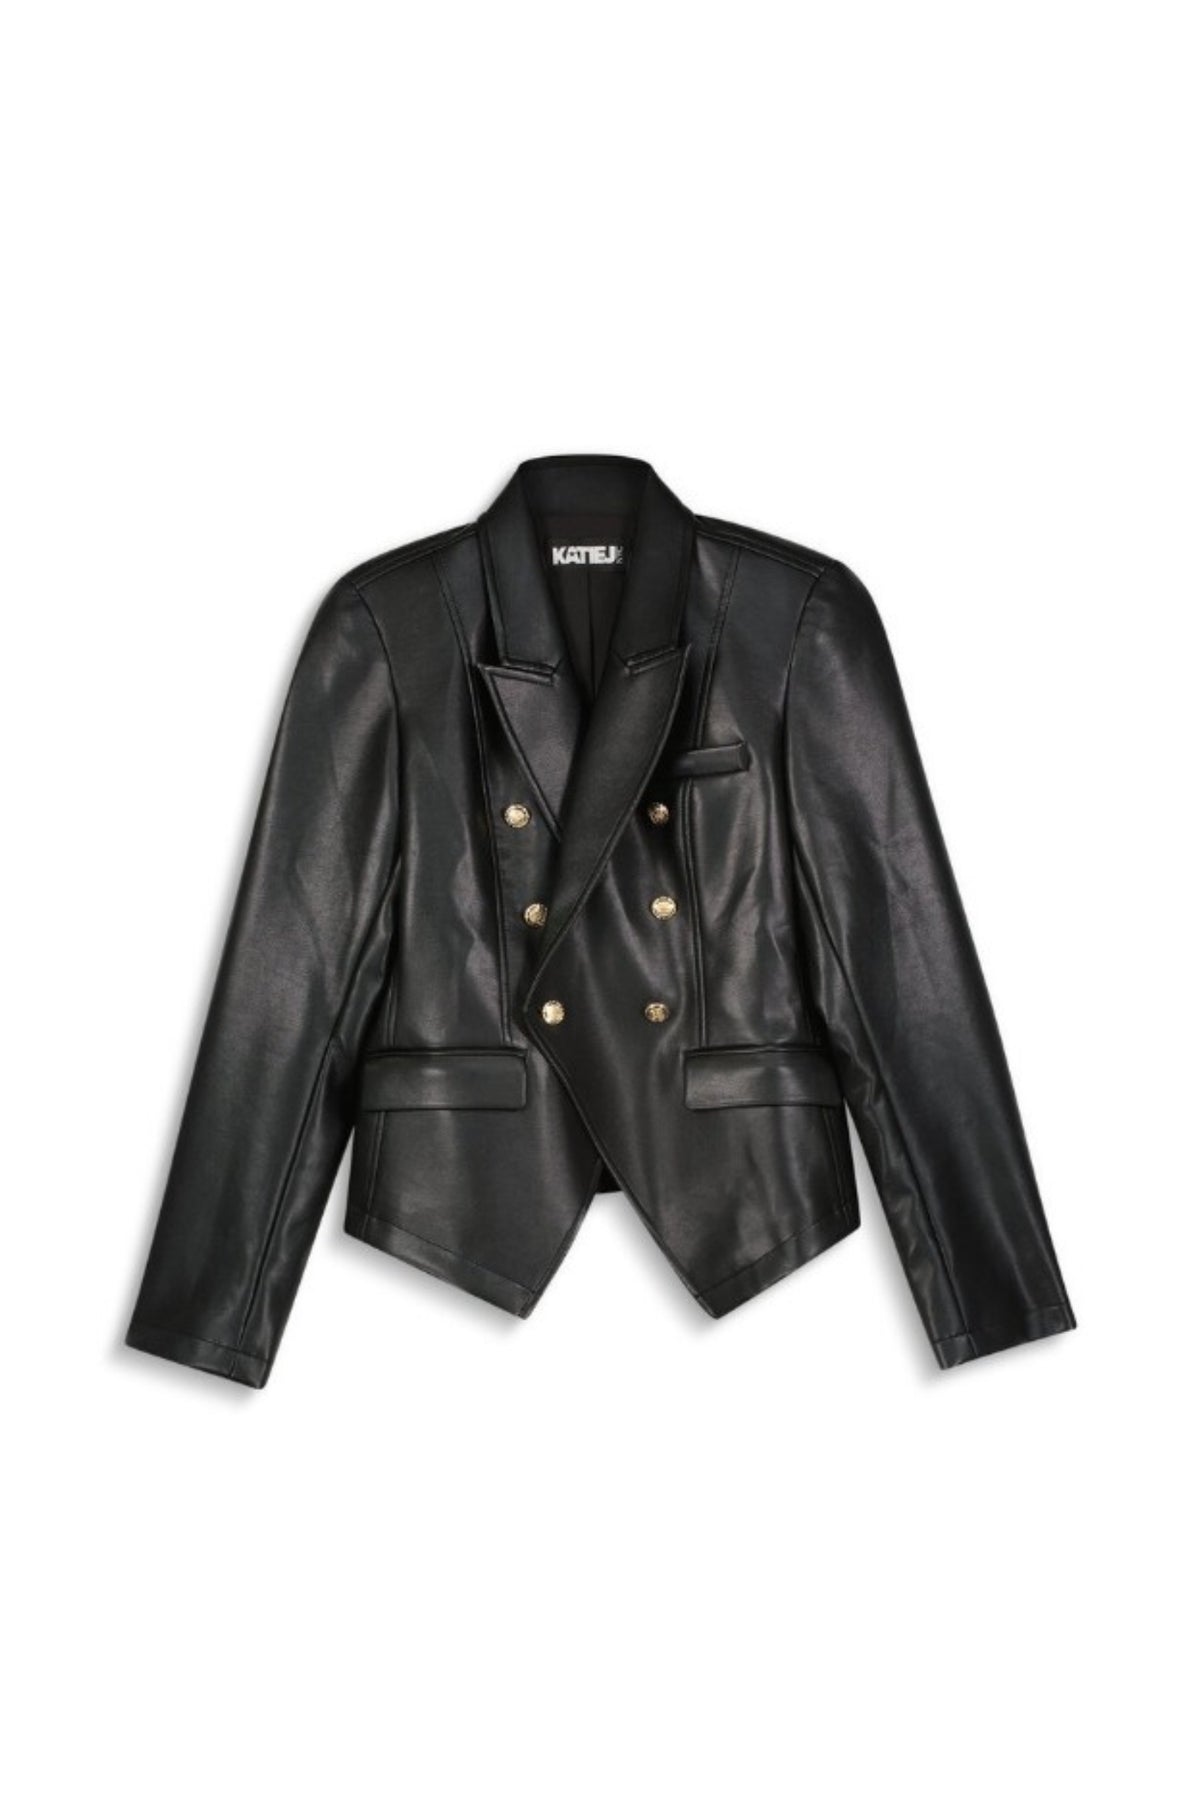 KatieJ NYC - Junior - Black Victoria Leather Jacket